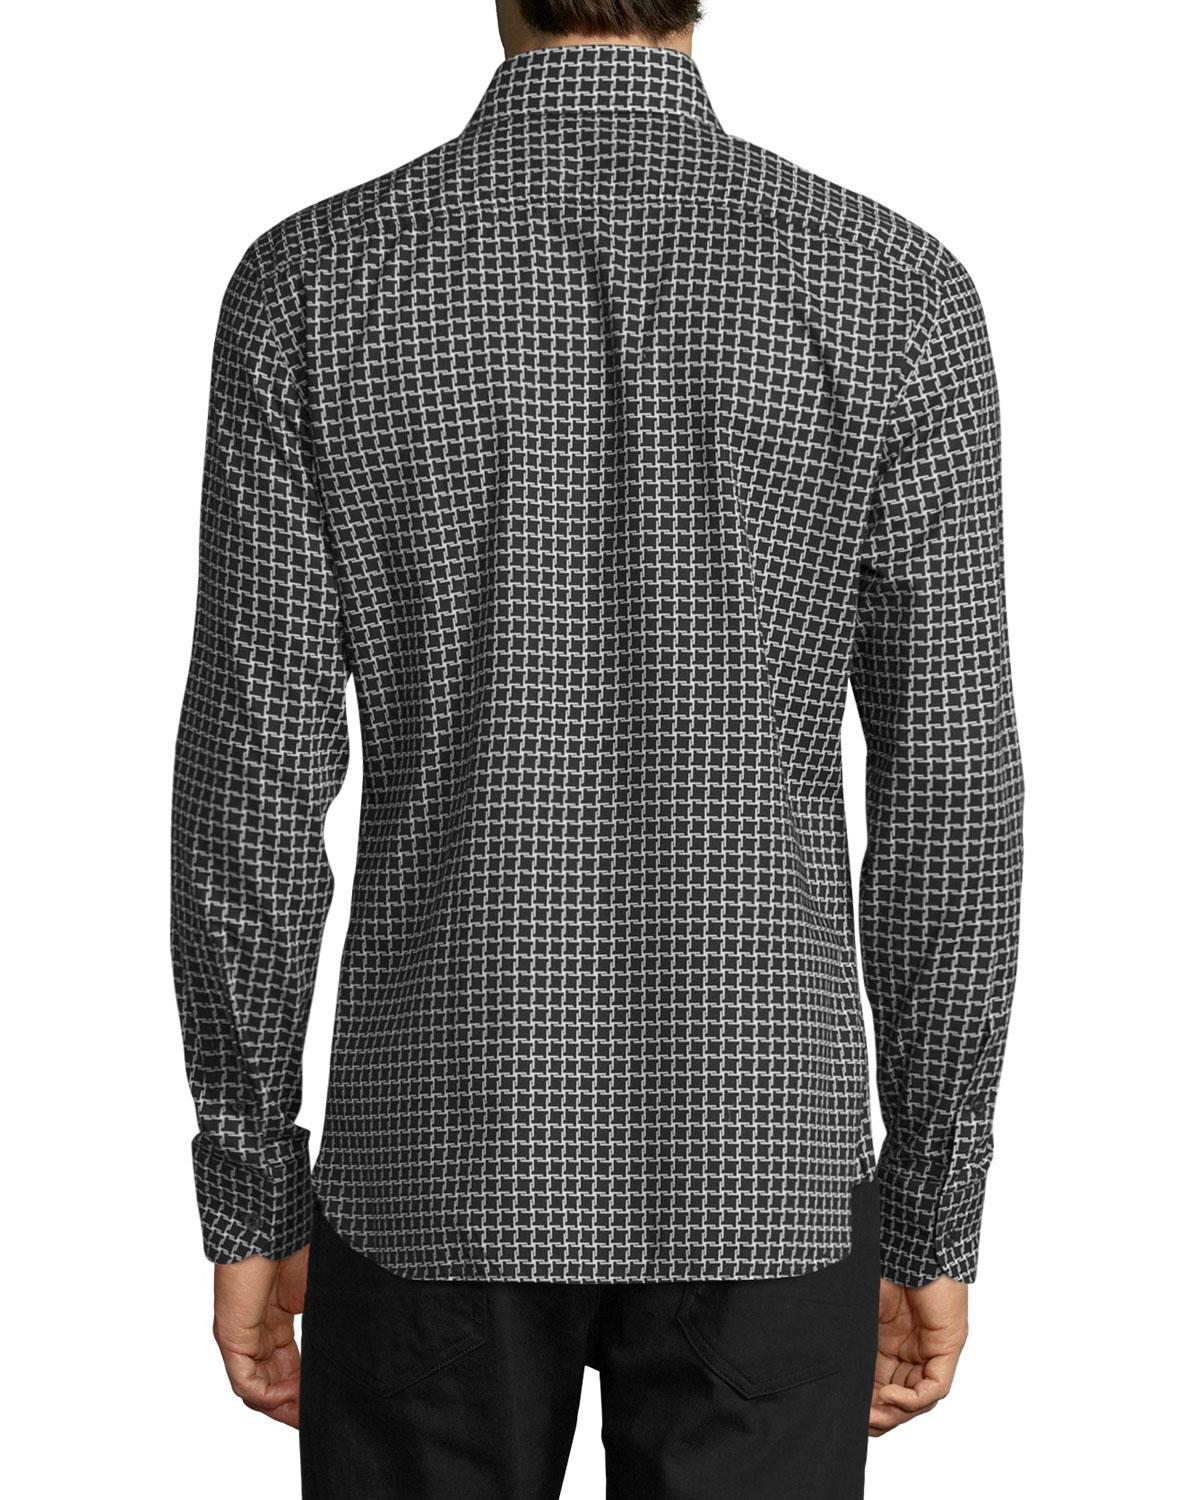 Lyst - Tom Ford Houndstooth-print Sport Shirt in Black for Men